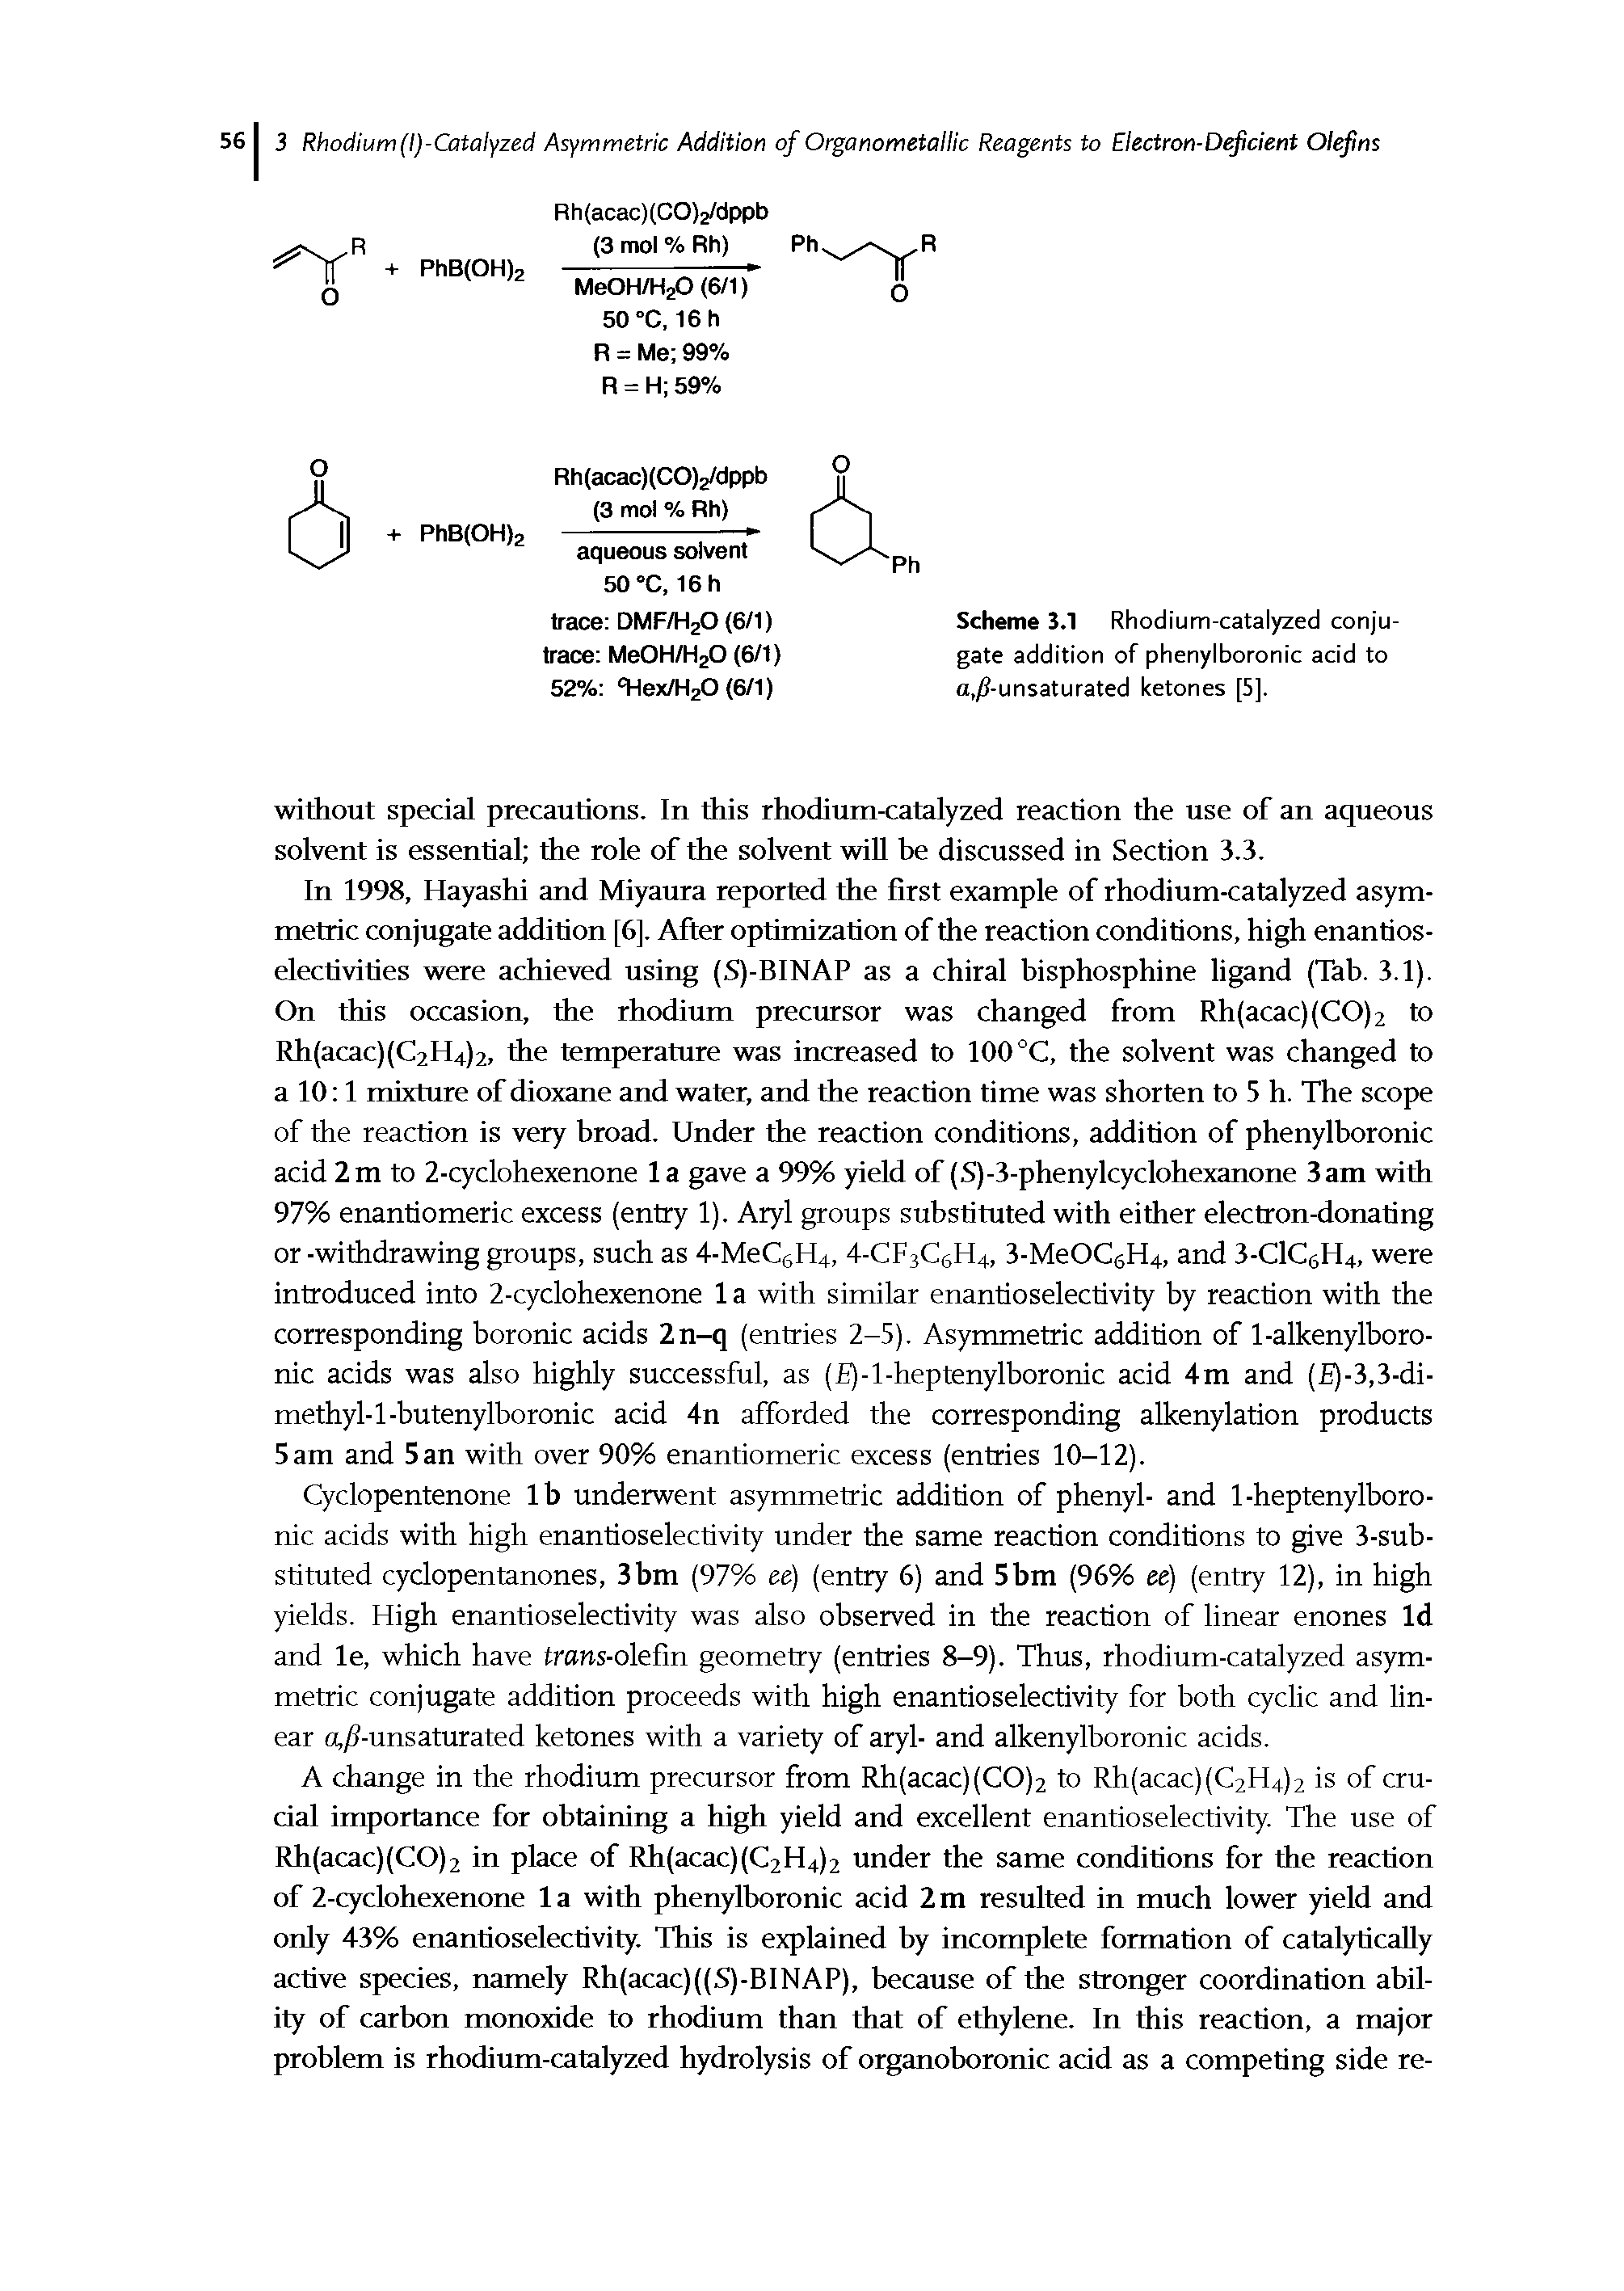 Scheme 3.1 Rhodium-catalyzed conjugate addition of phenylboronic acid to a,/ -unsaturated ketones [5].